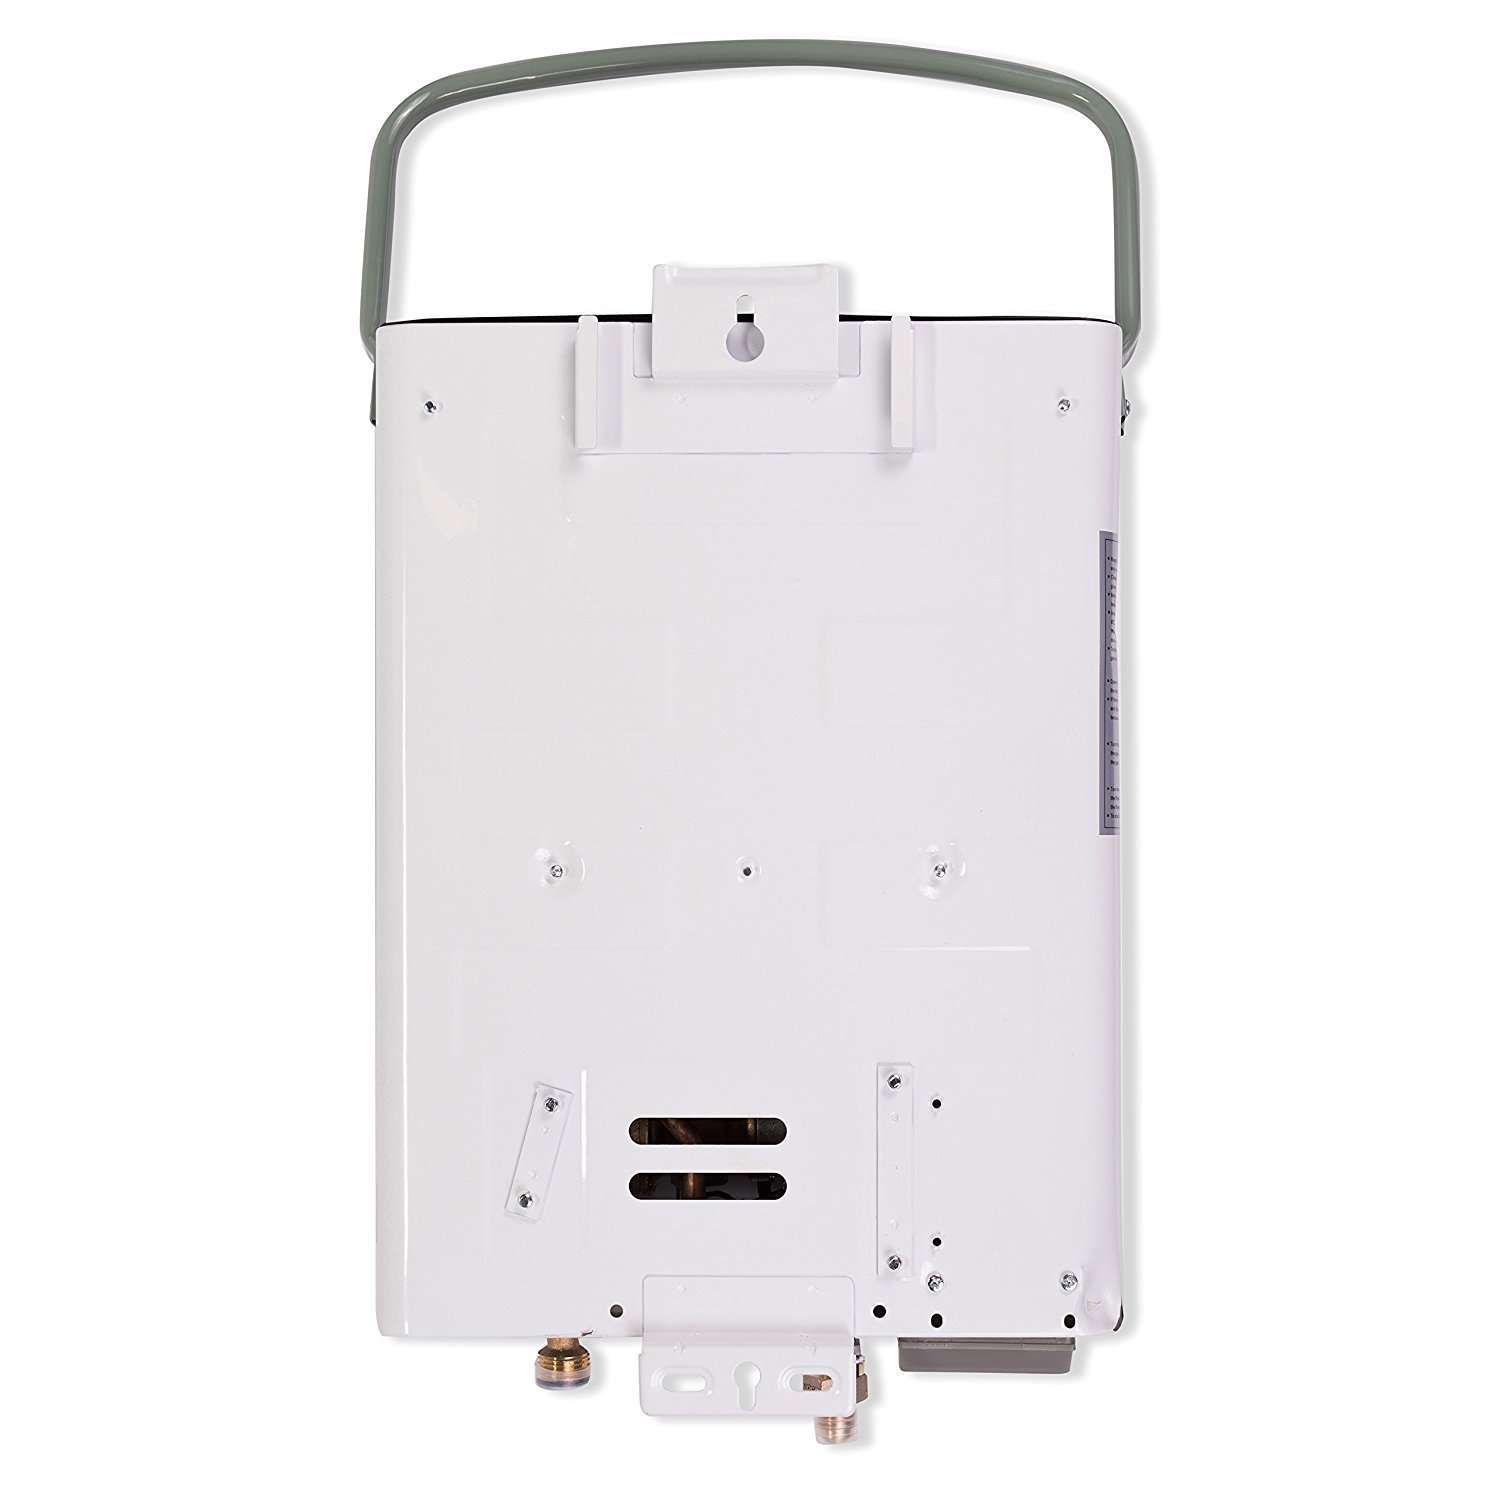 Eccotemp, Eccotemp L5 1.5 GPM Propane Tankless Water Heater Manufacturer RFB